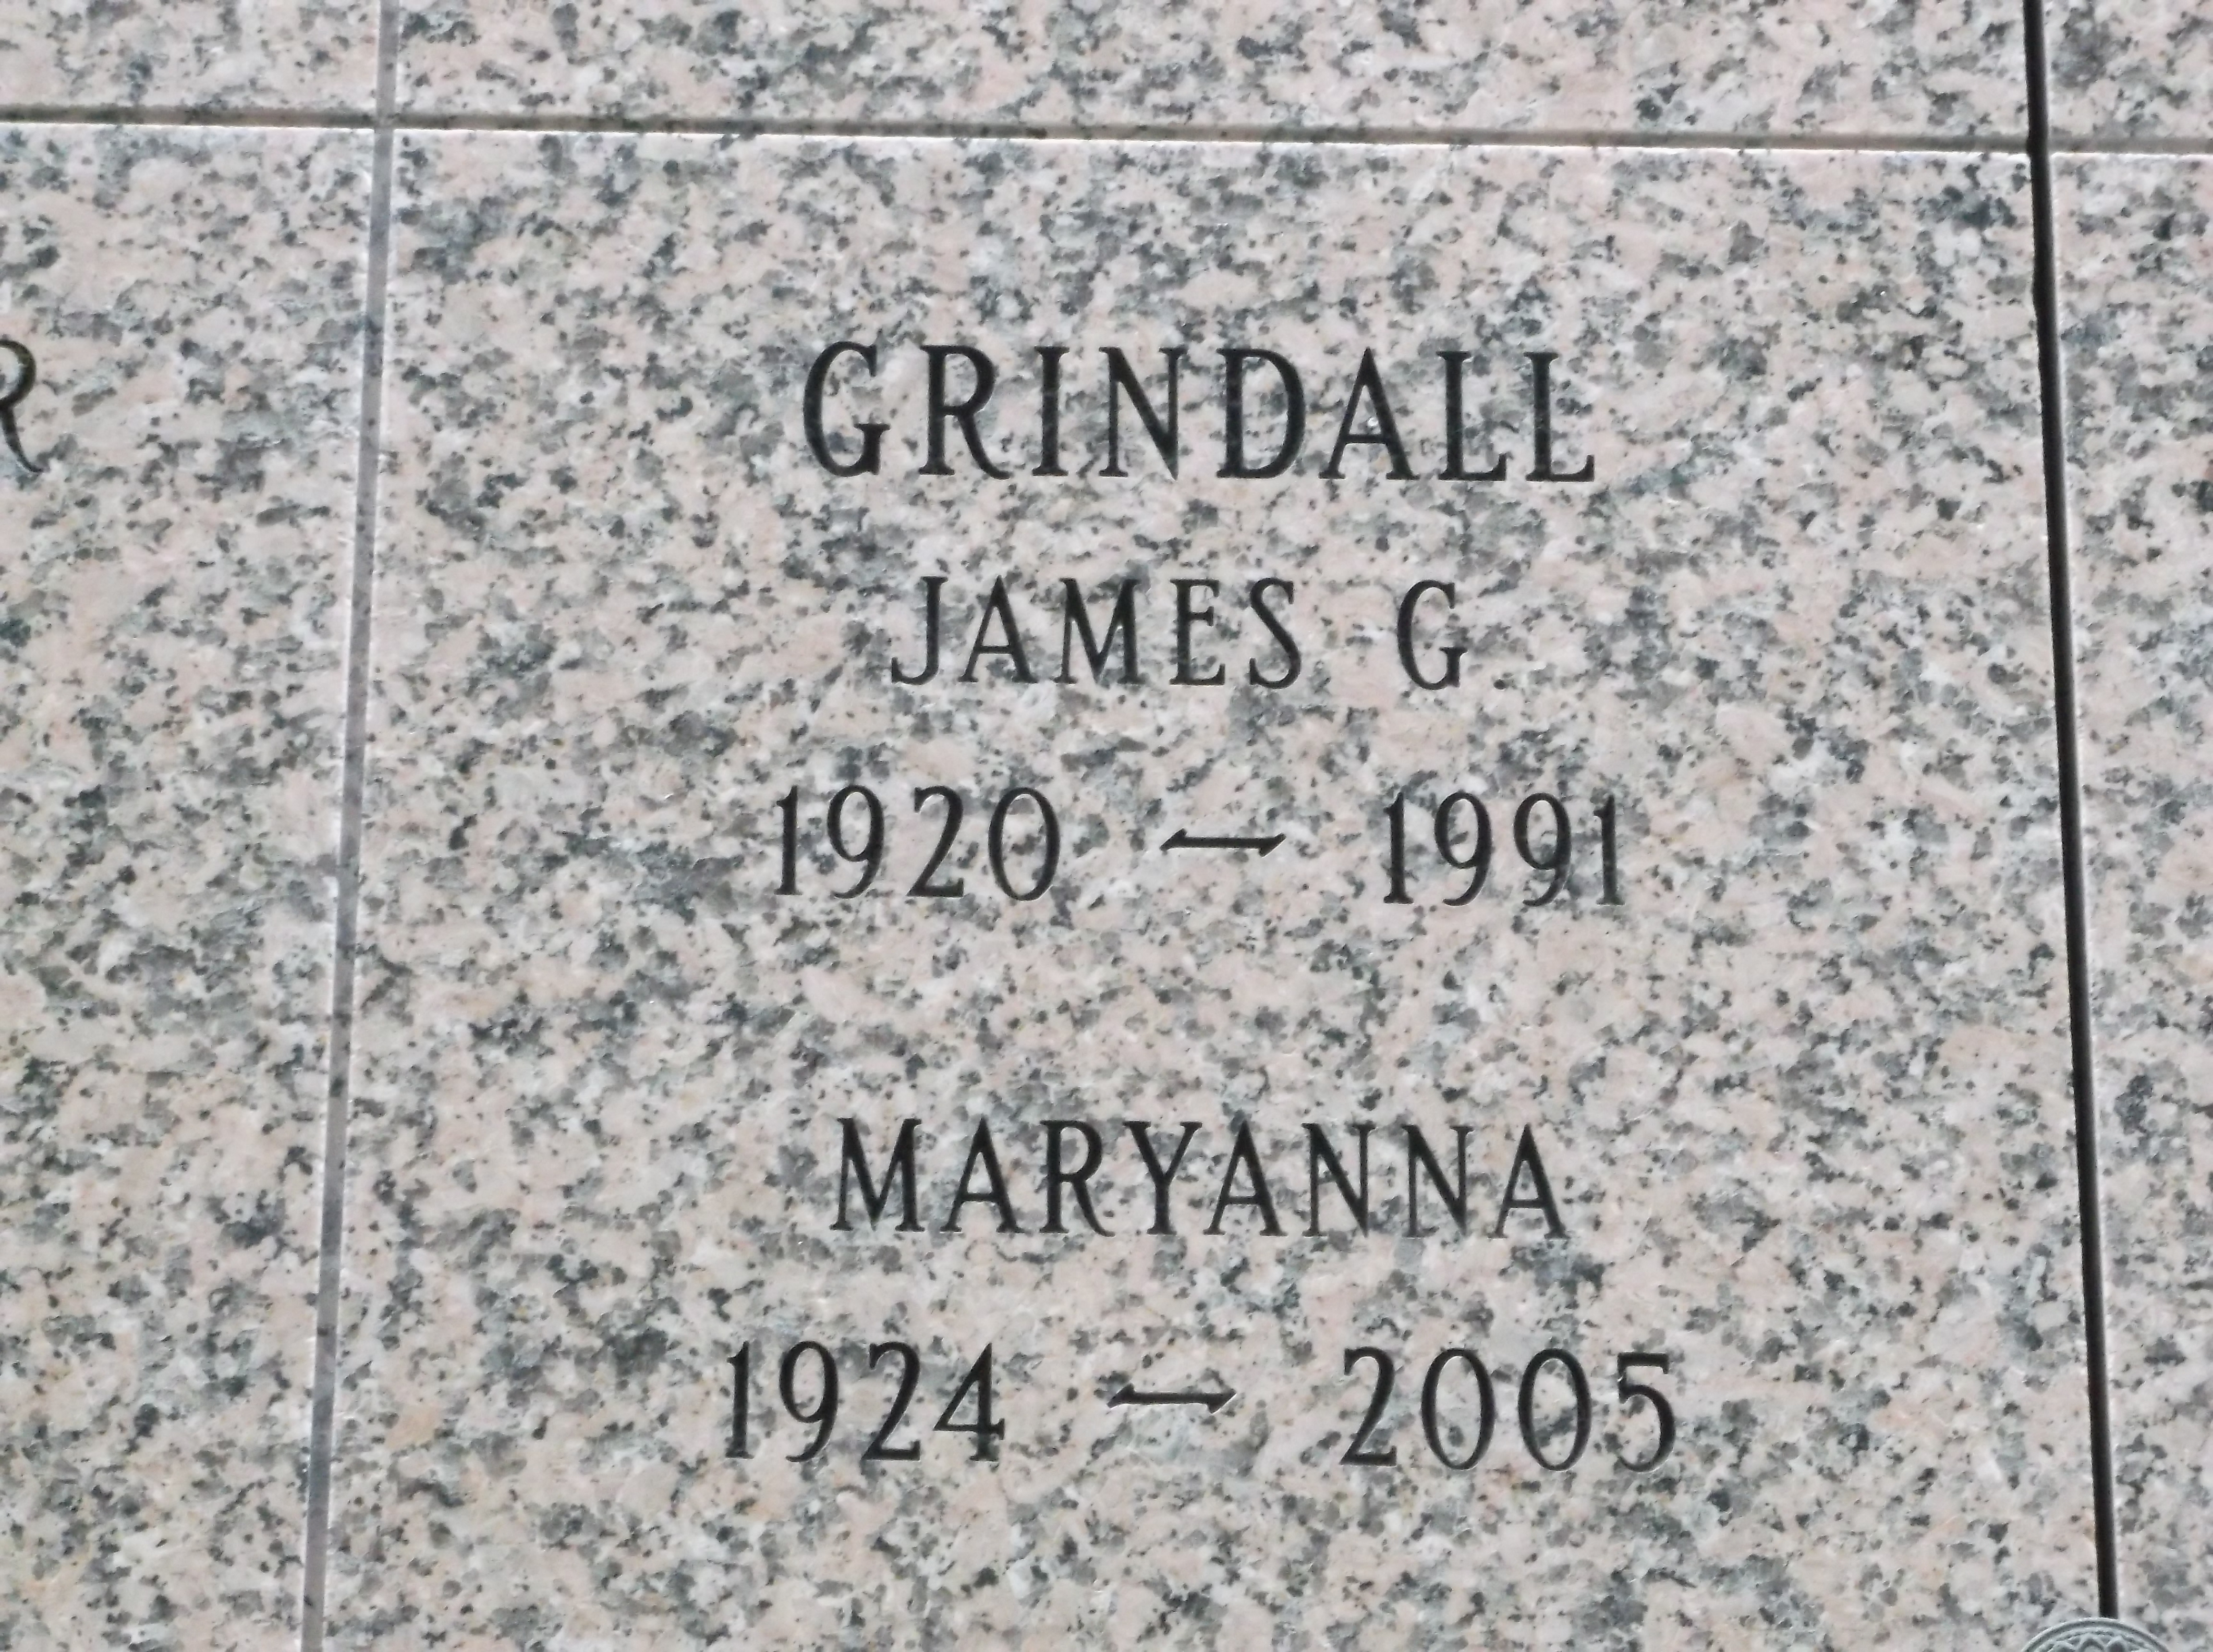 James G Grindall